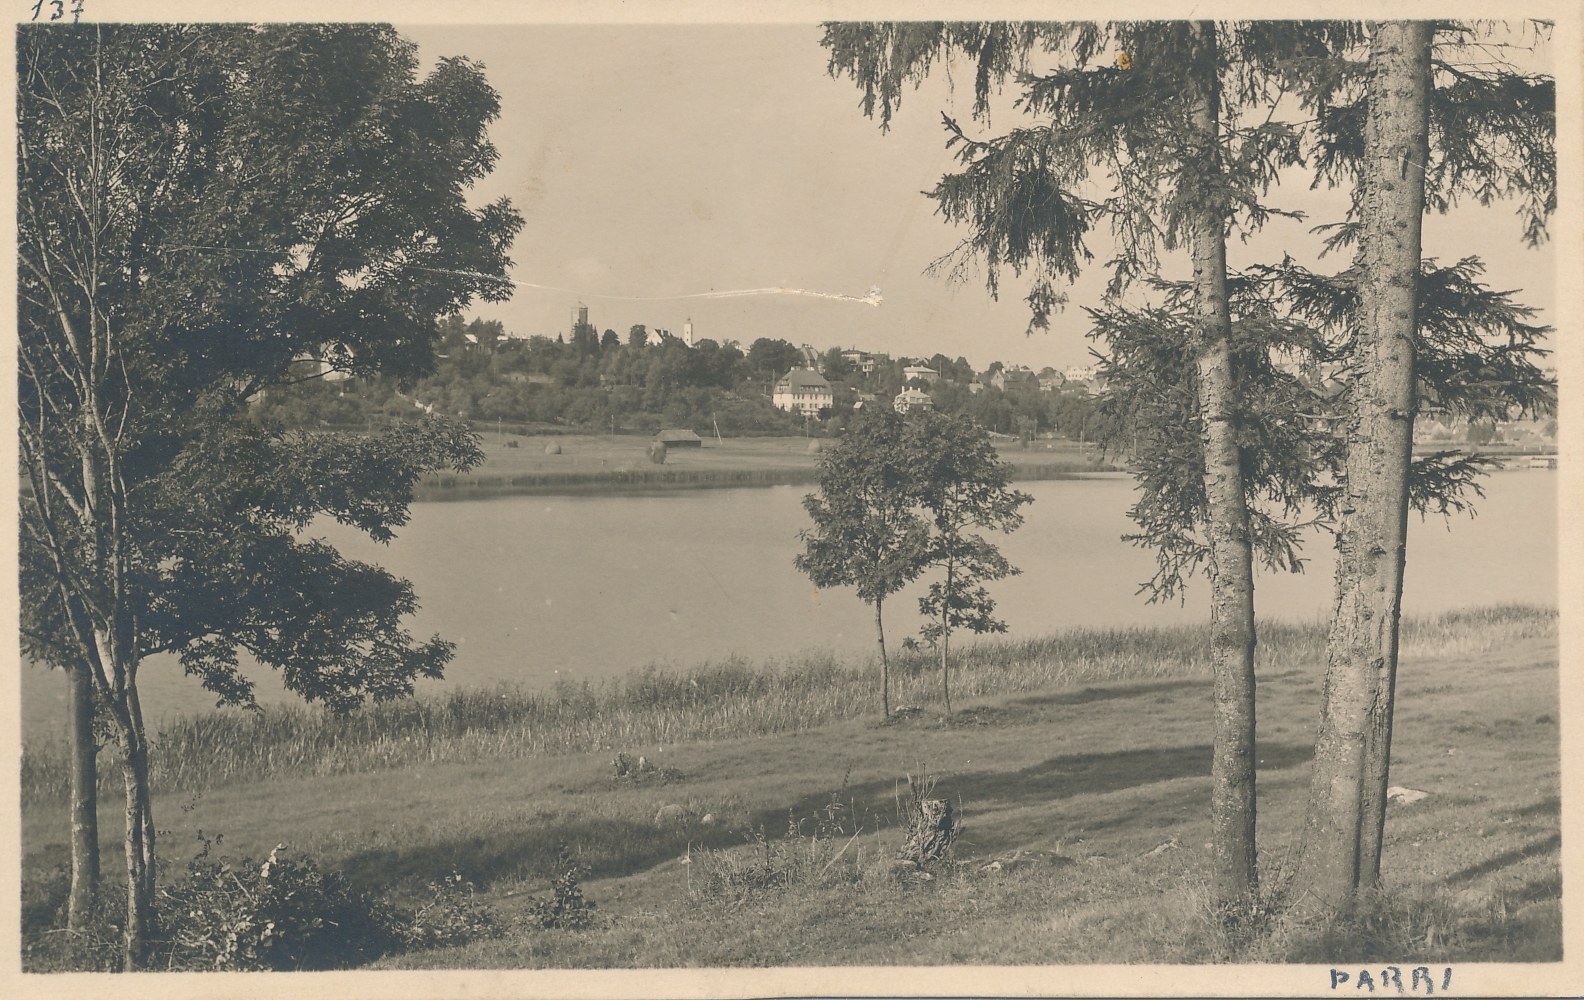 foto, Viljandi järv, foto T. Parri, u 1935